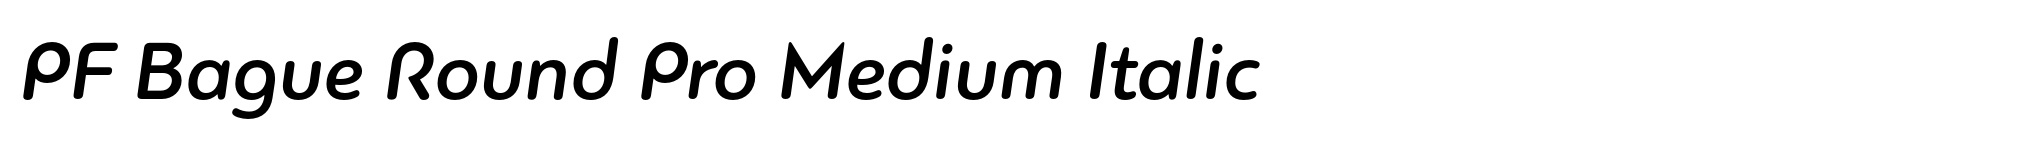 PF Bague Round Pro Medium Italic image